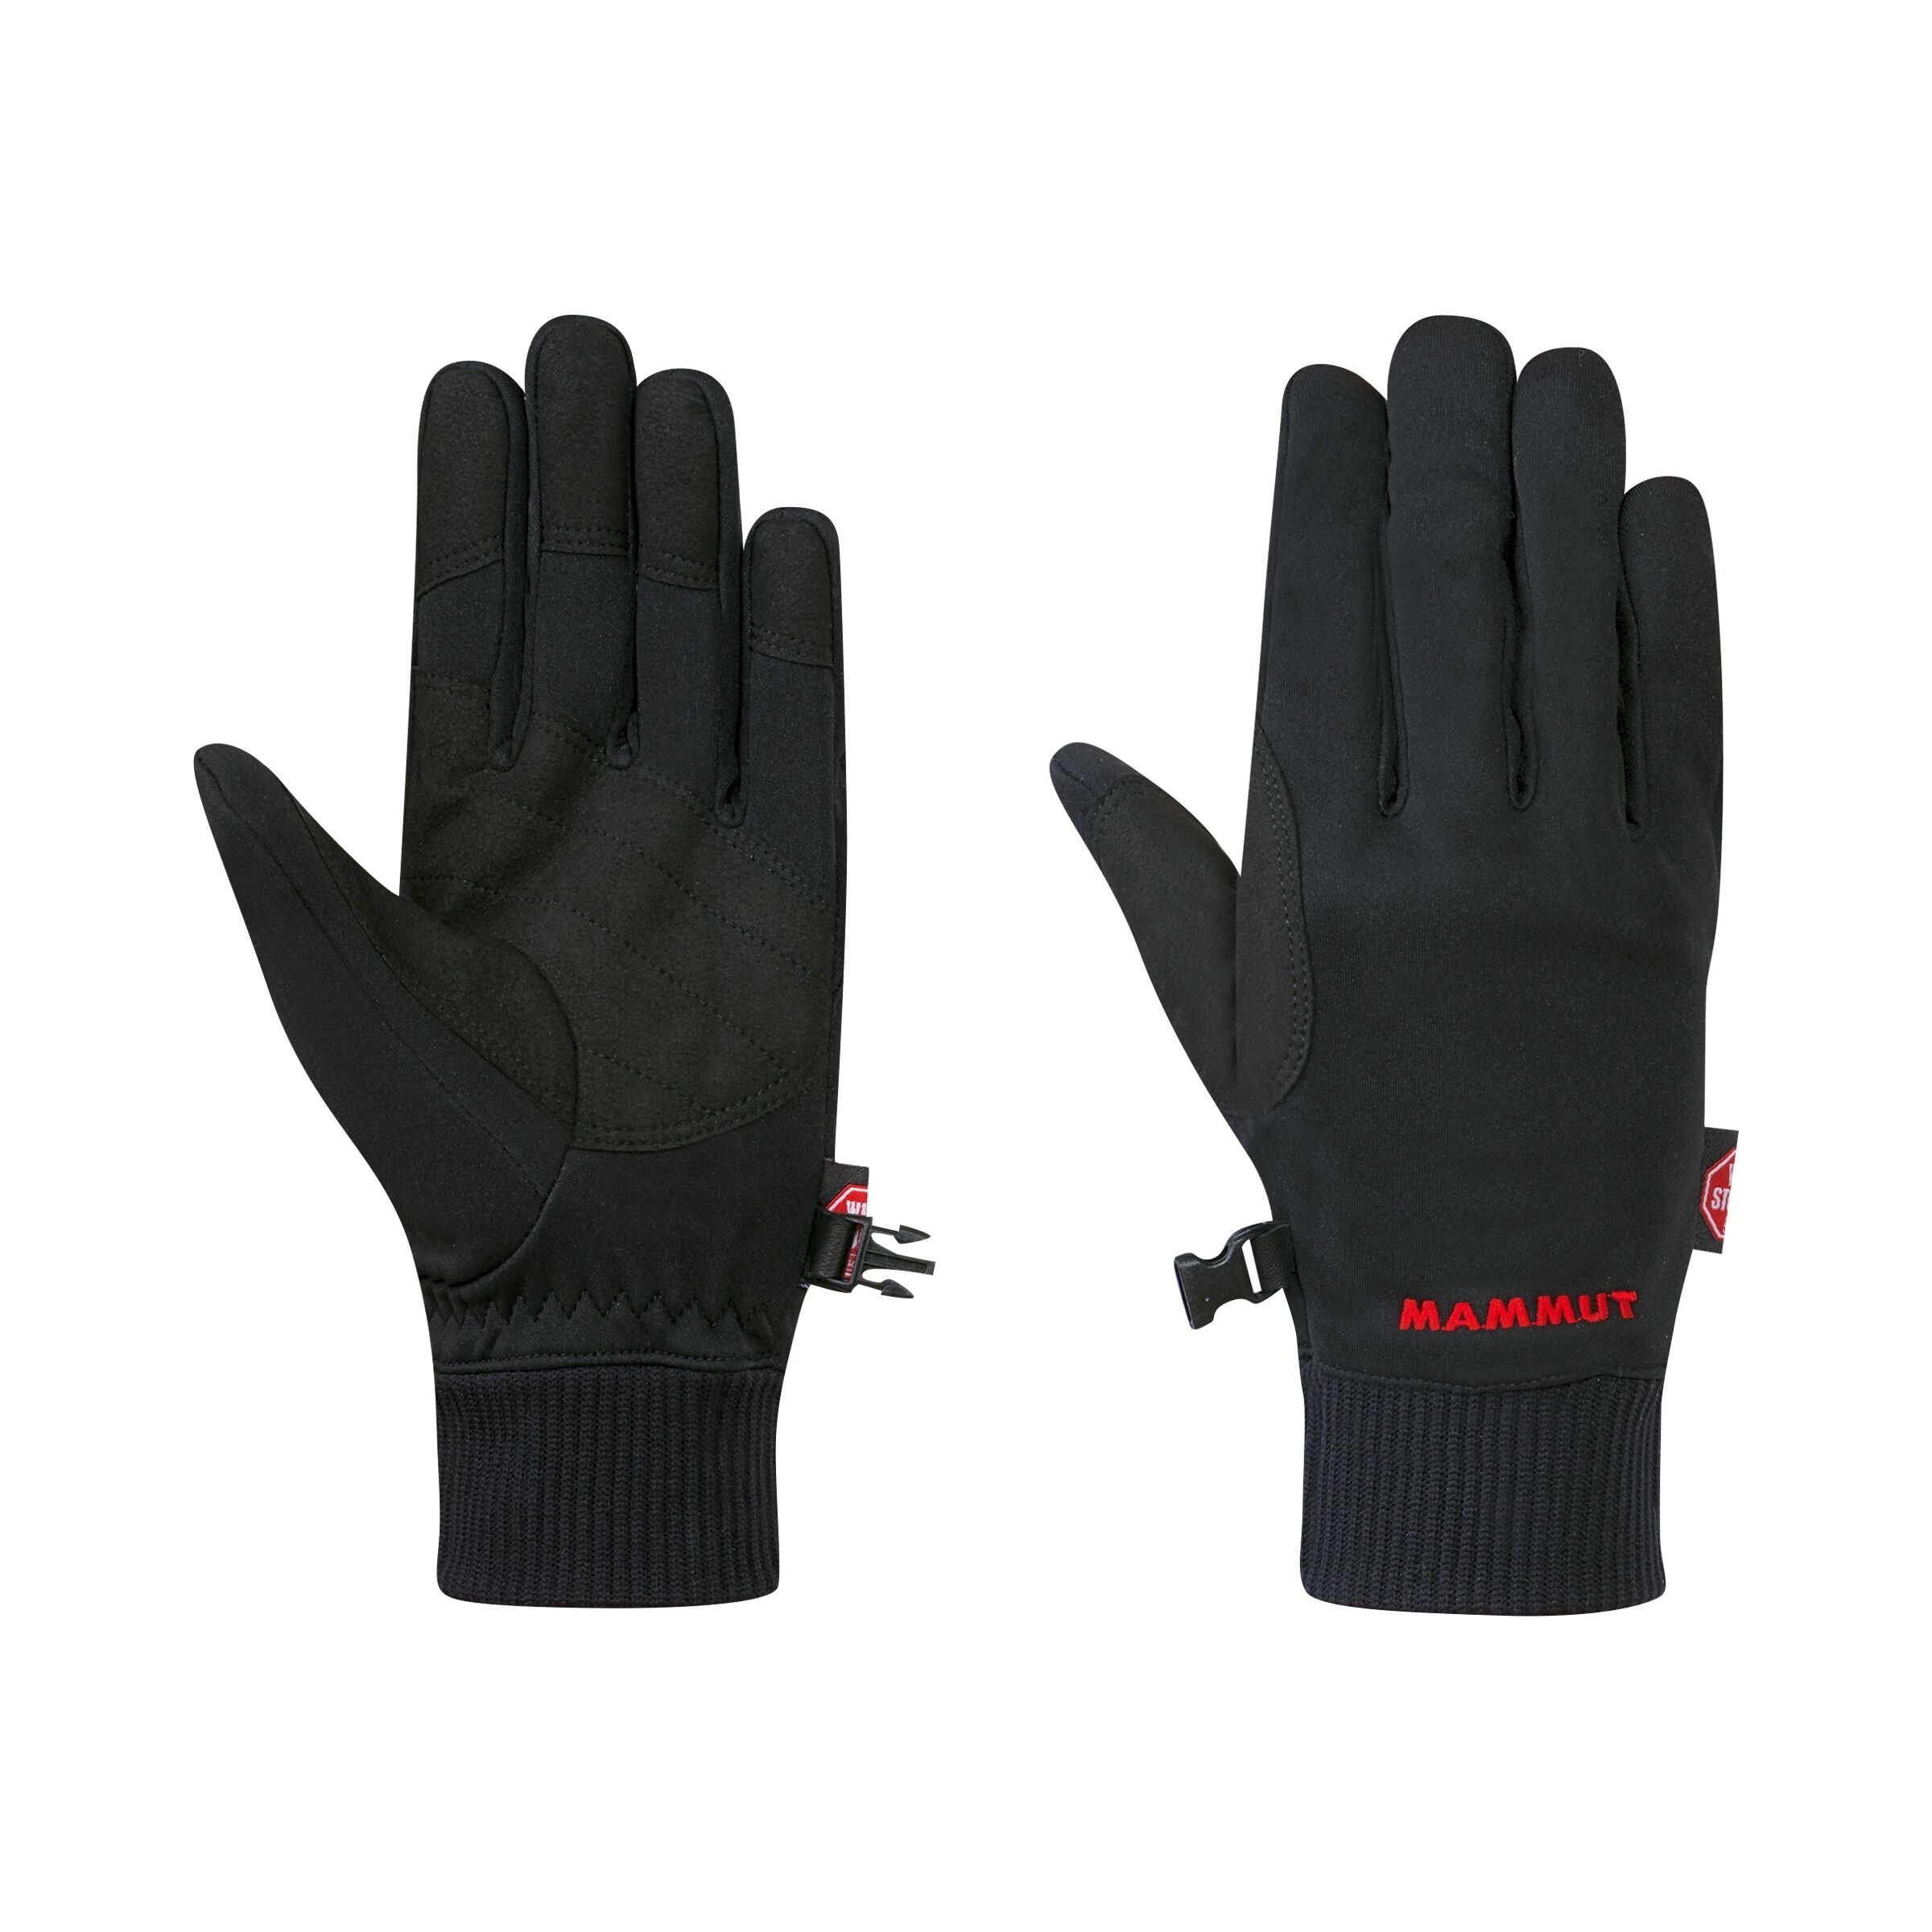 Mammut Astro Glove - Handskar